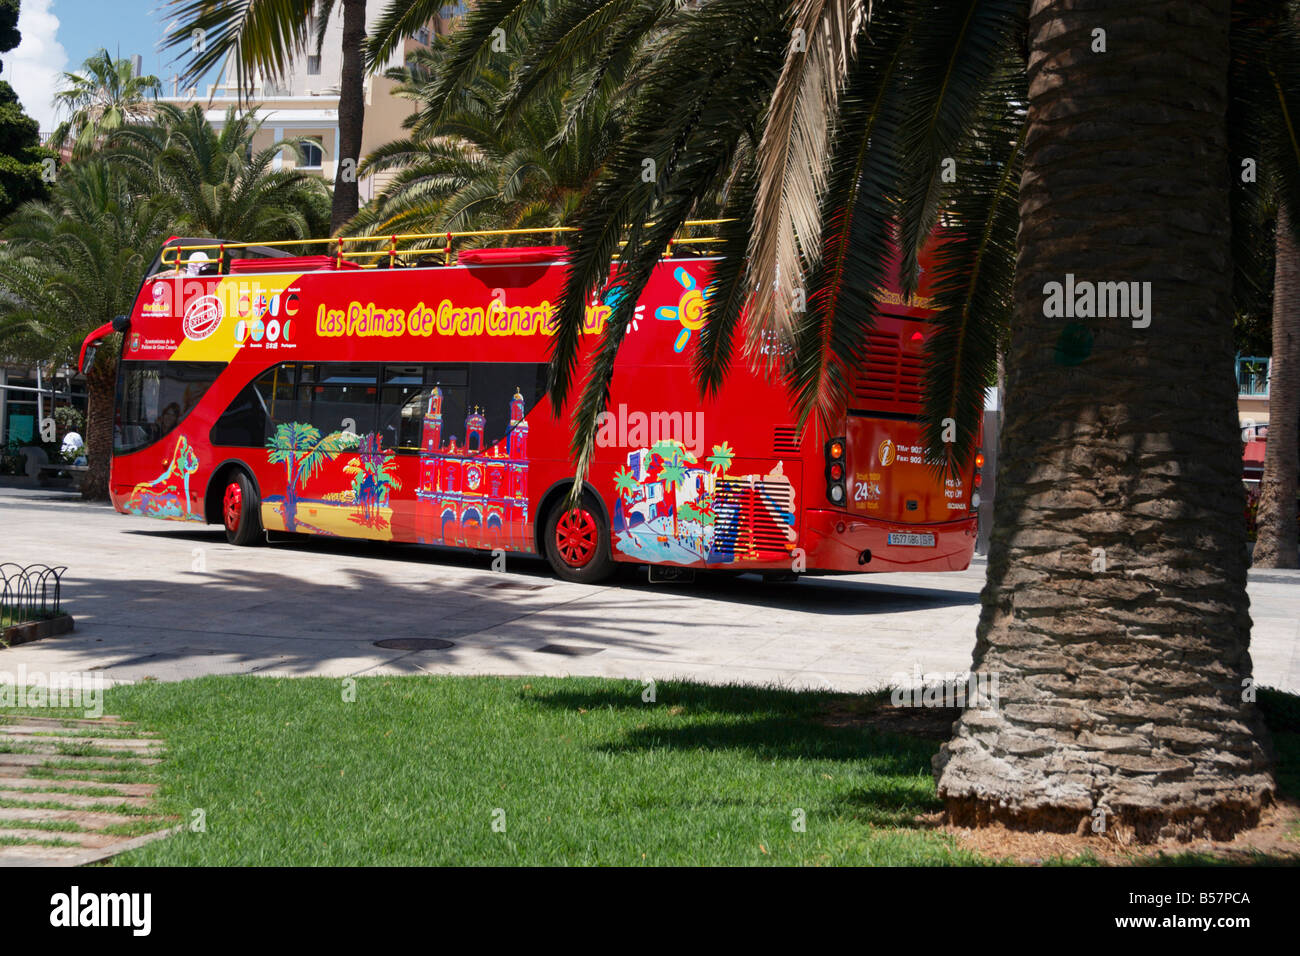 Red sightseeing bus in Parque Santa Catalina, Las Palmas, Gran Canaria  Stock Photo - Alamy